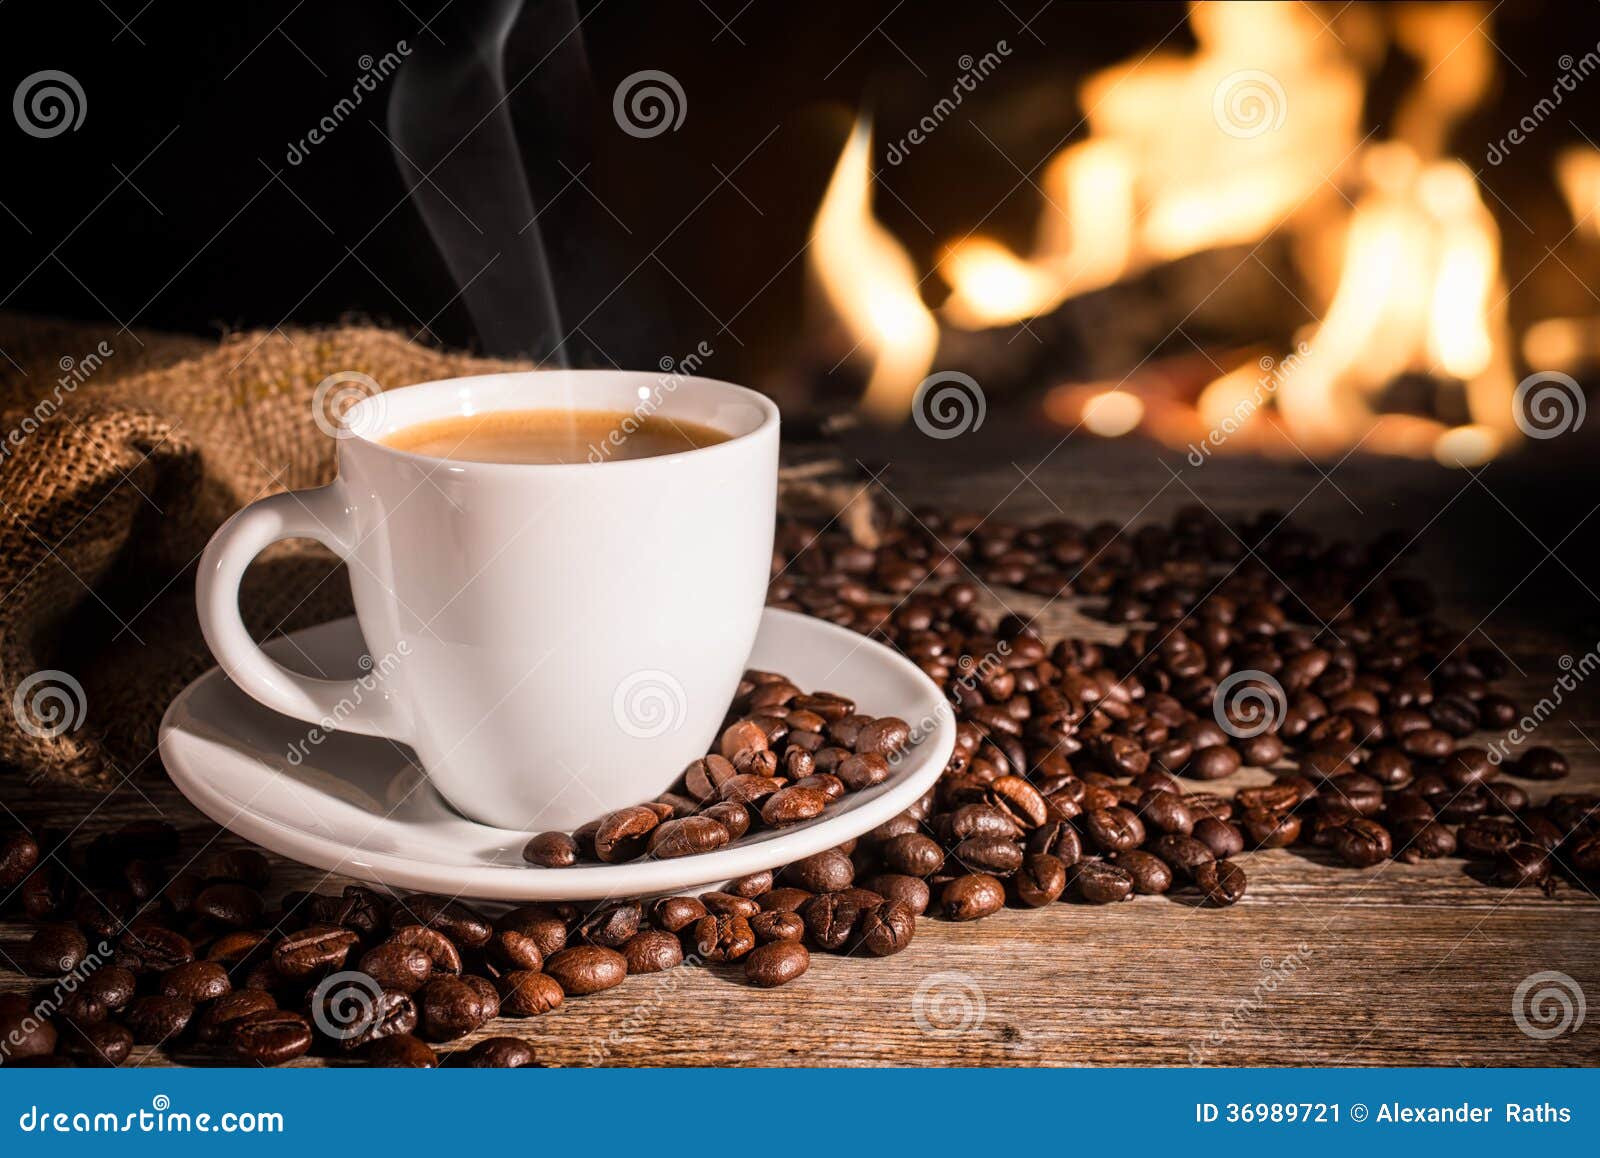 Una taza de café caliente en este día fresco